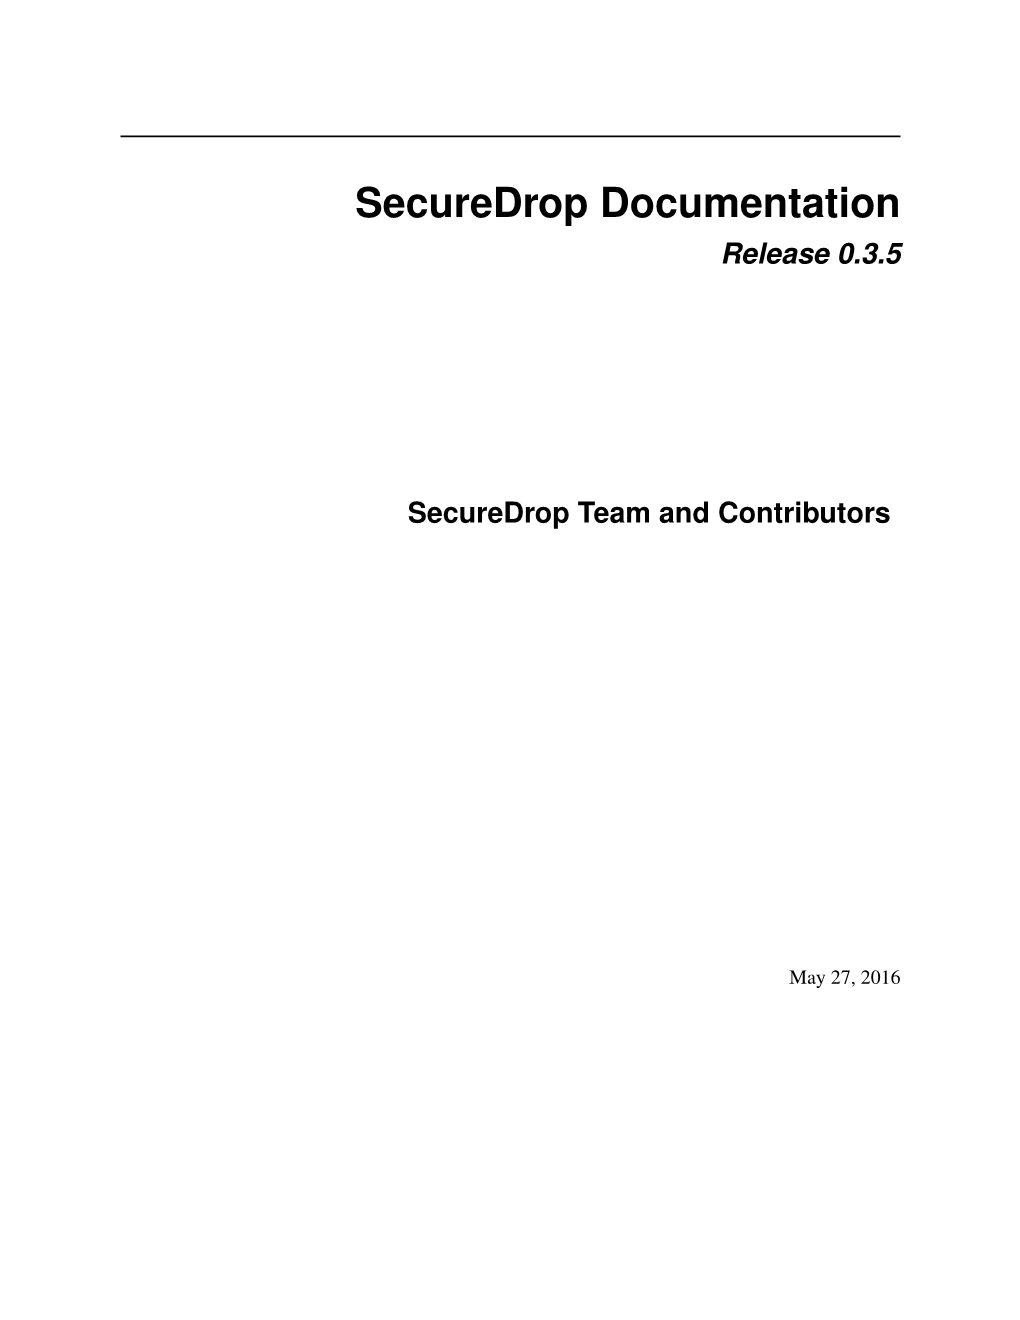 Securedrop Documentation Release 0.3.5